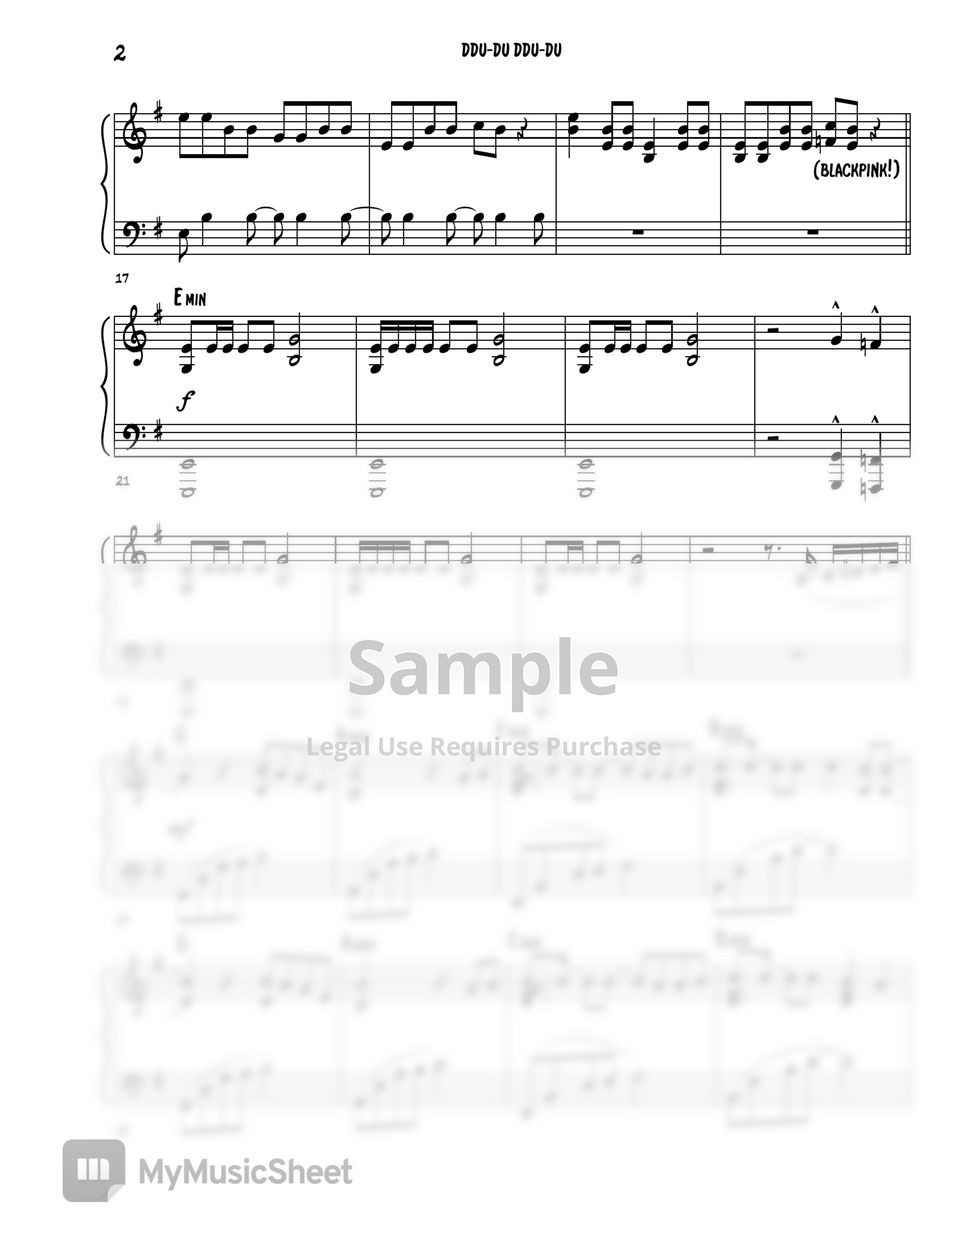 BLACKPINK - DDU-DU DDU-DU (solo piano arrangement)